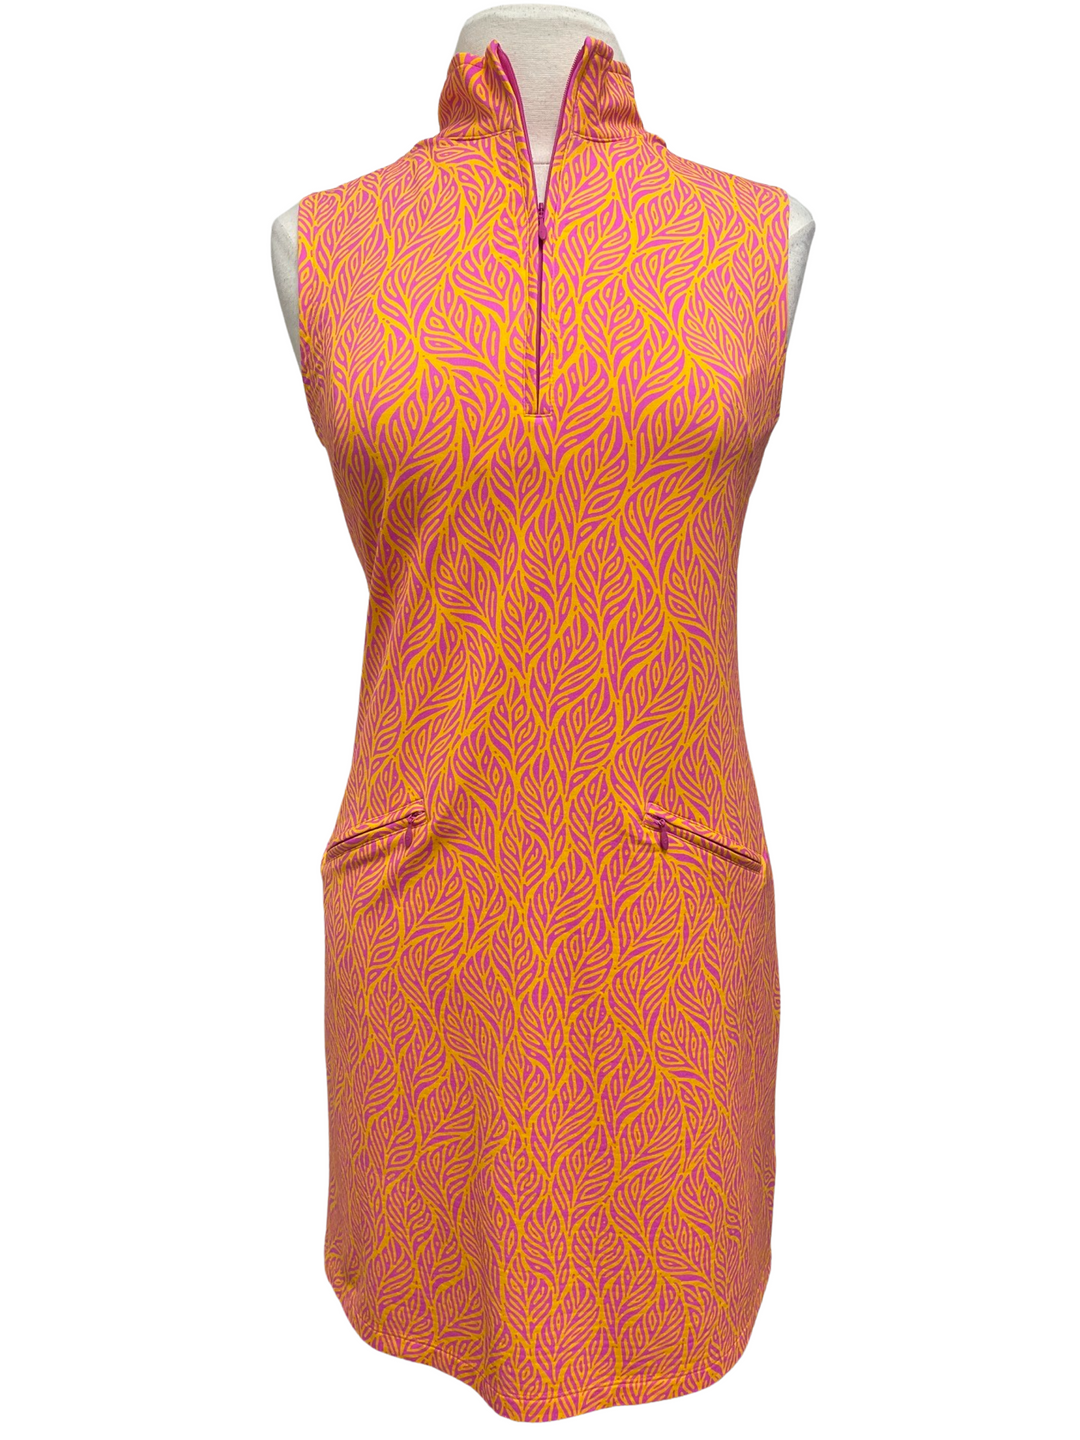 IBKUL Orange Palm Leaf Dress - Small - Skorzie